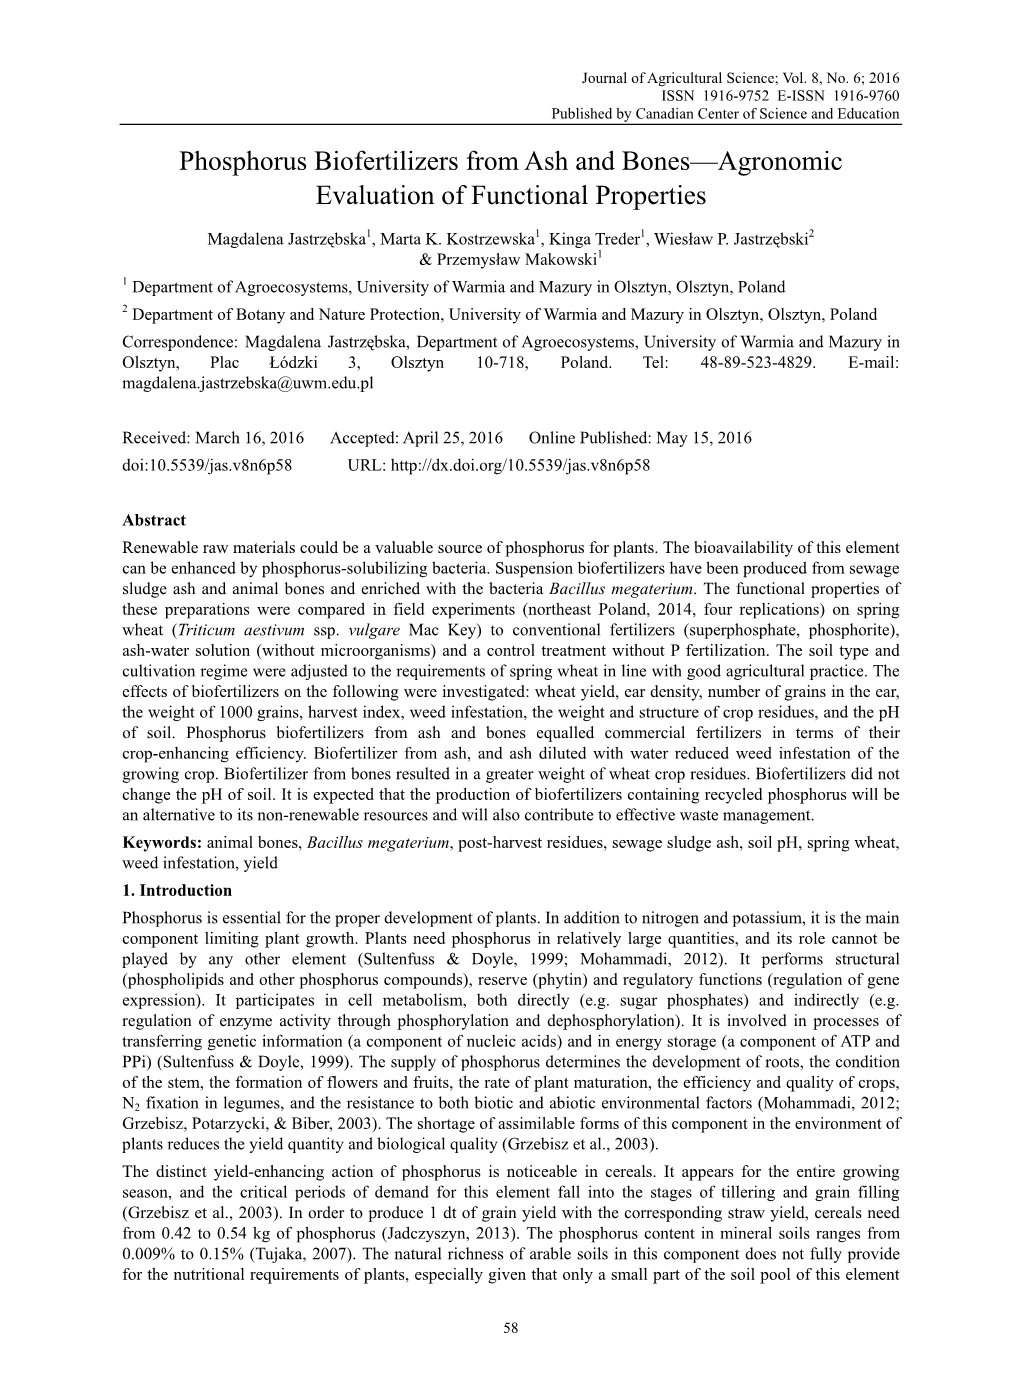 Phosphorus Biofertilizers from Ash and Bones—Agronomic Evaluation of Functional Properties